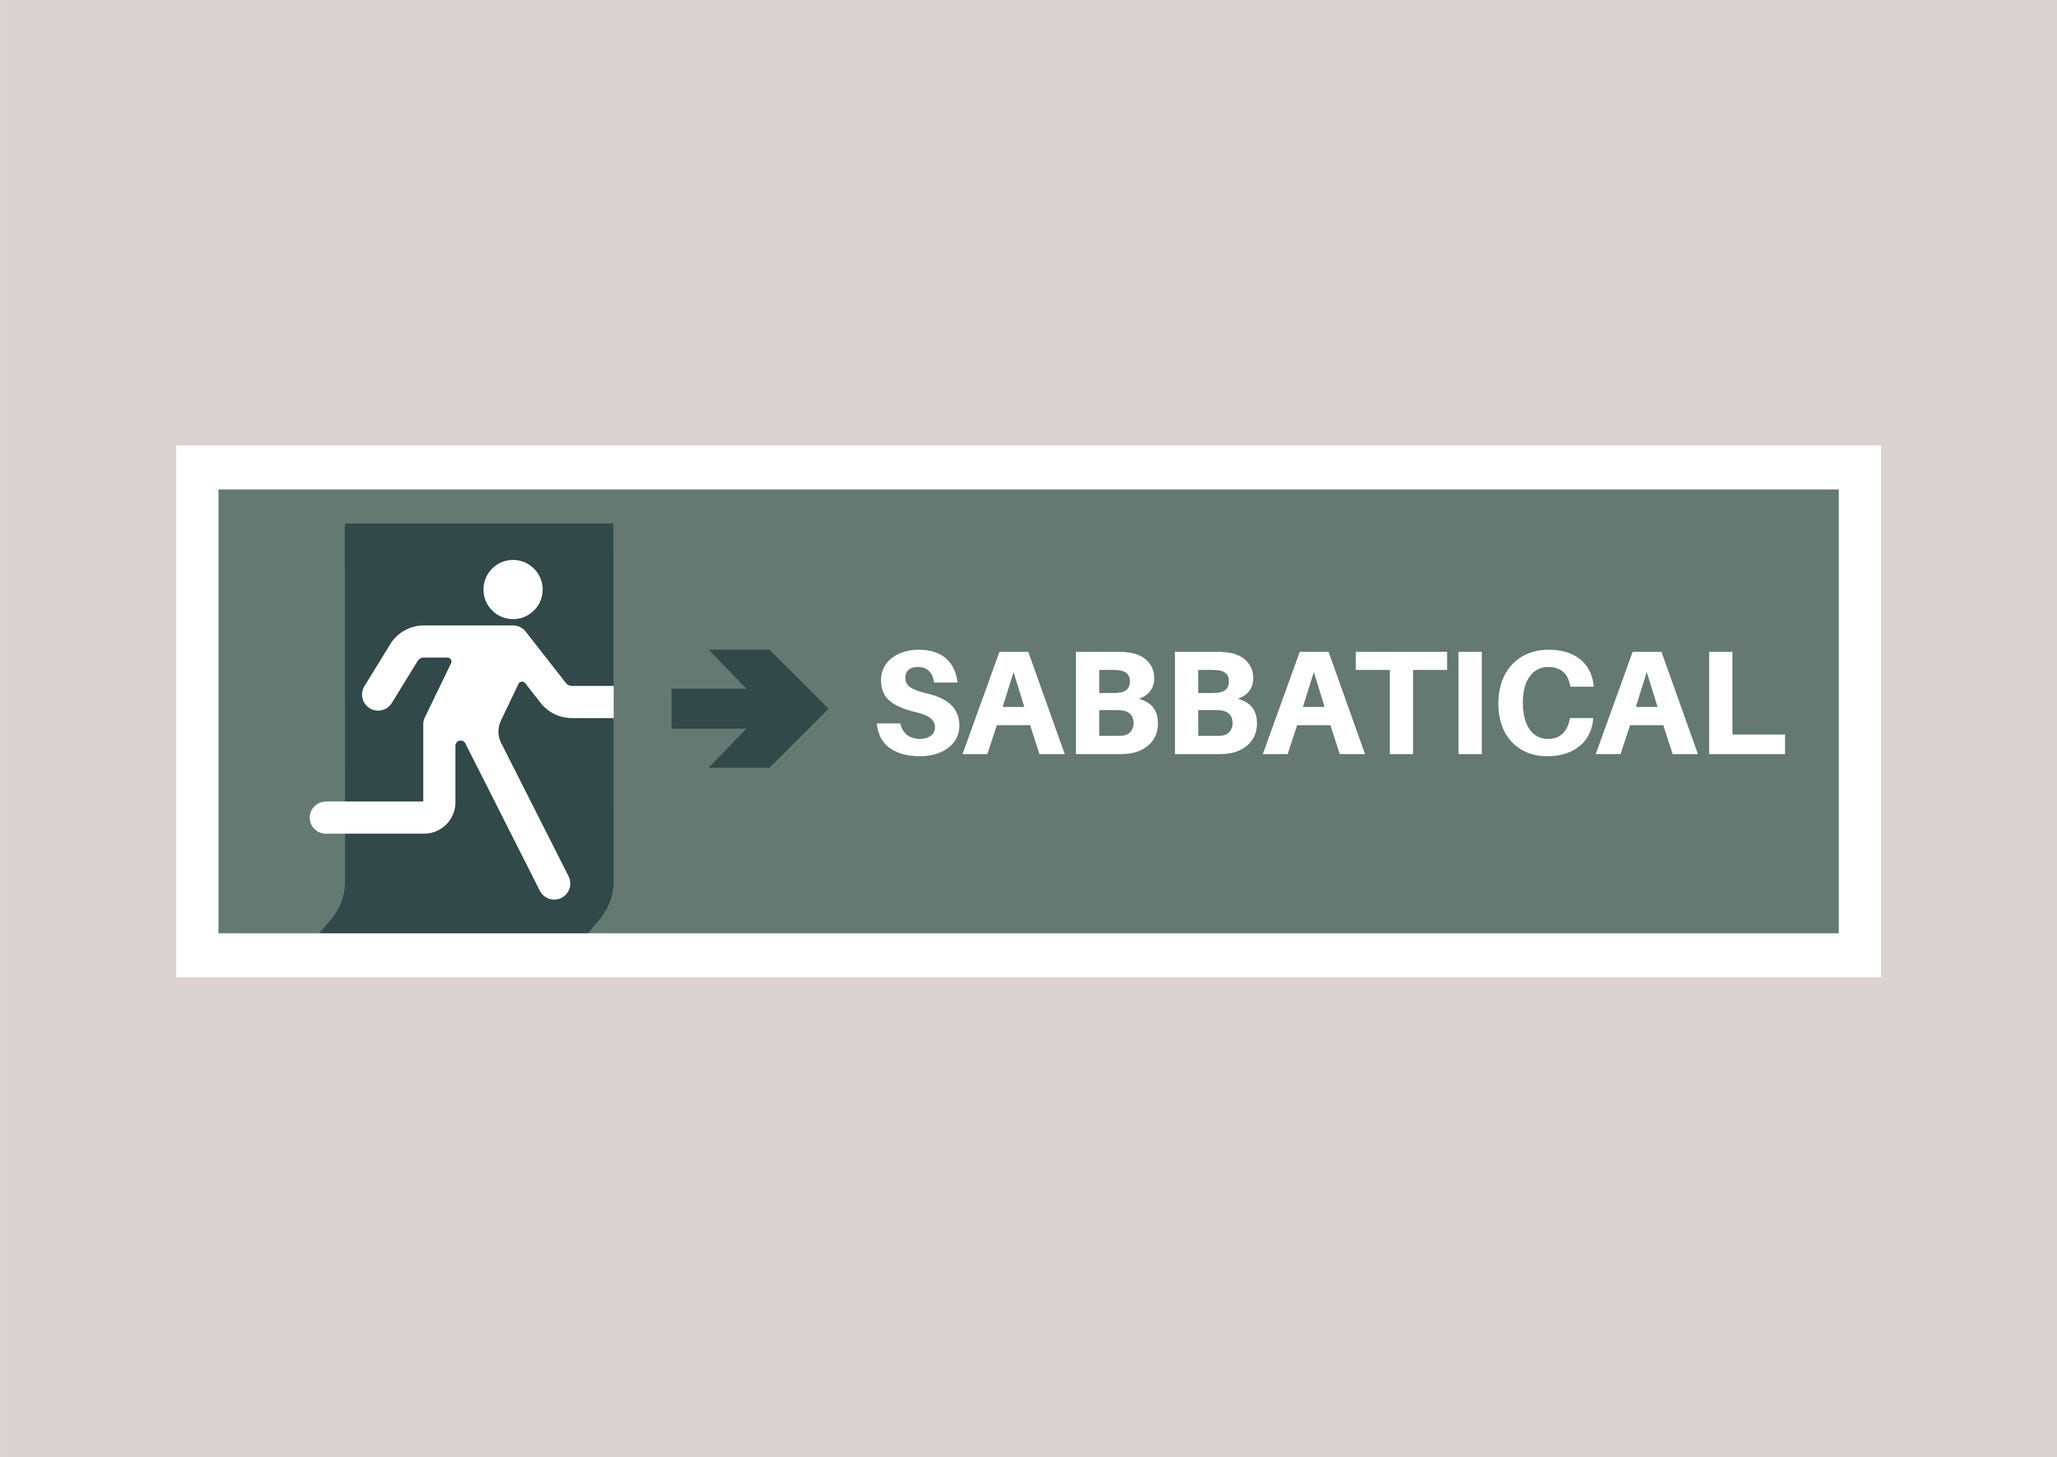 Have you ever taken a work sabbatical? [Video]